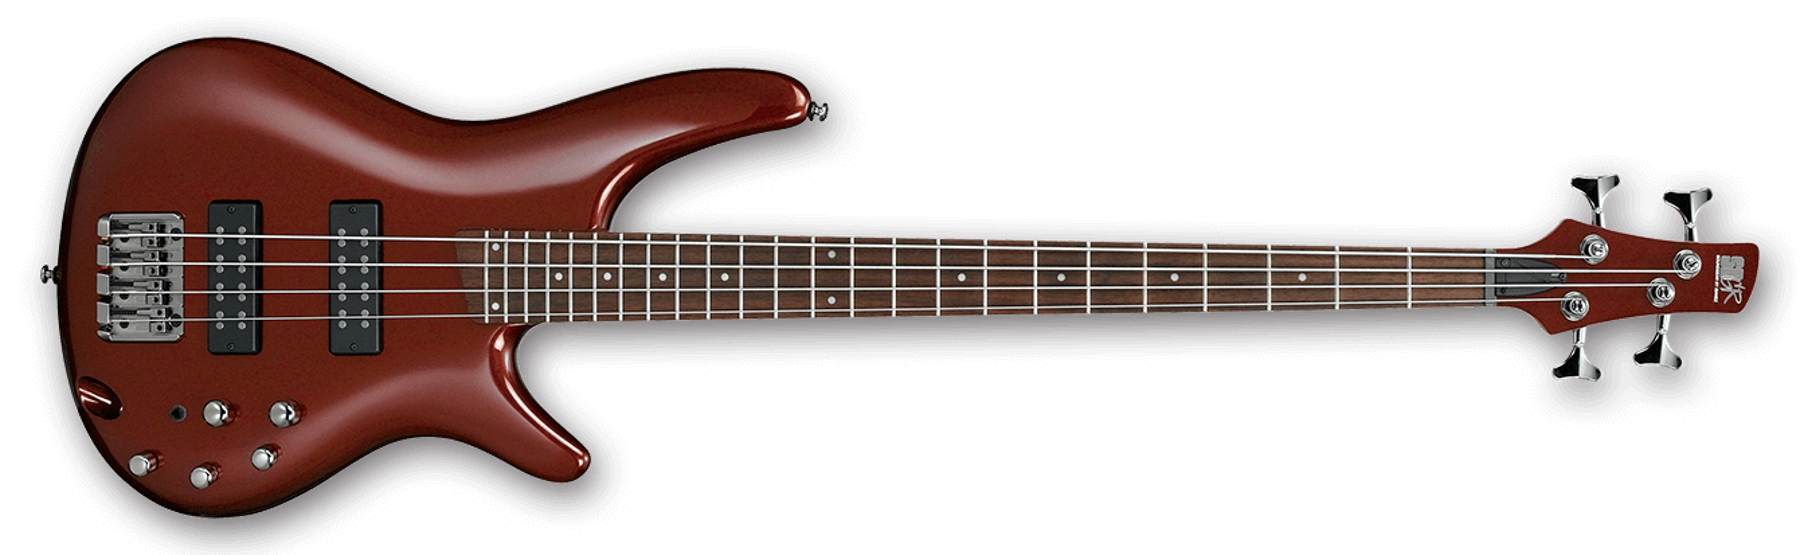 Ibanez SR300E Bass Guitar, 4 String - Cerulean Aura Burst for sale